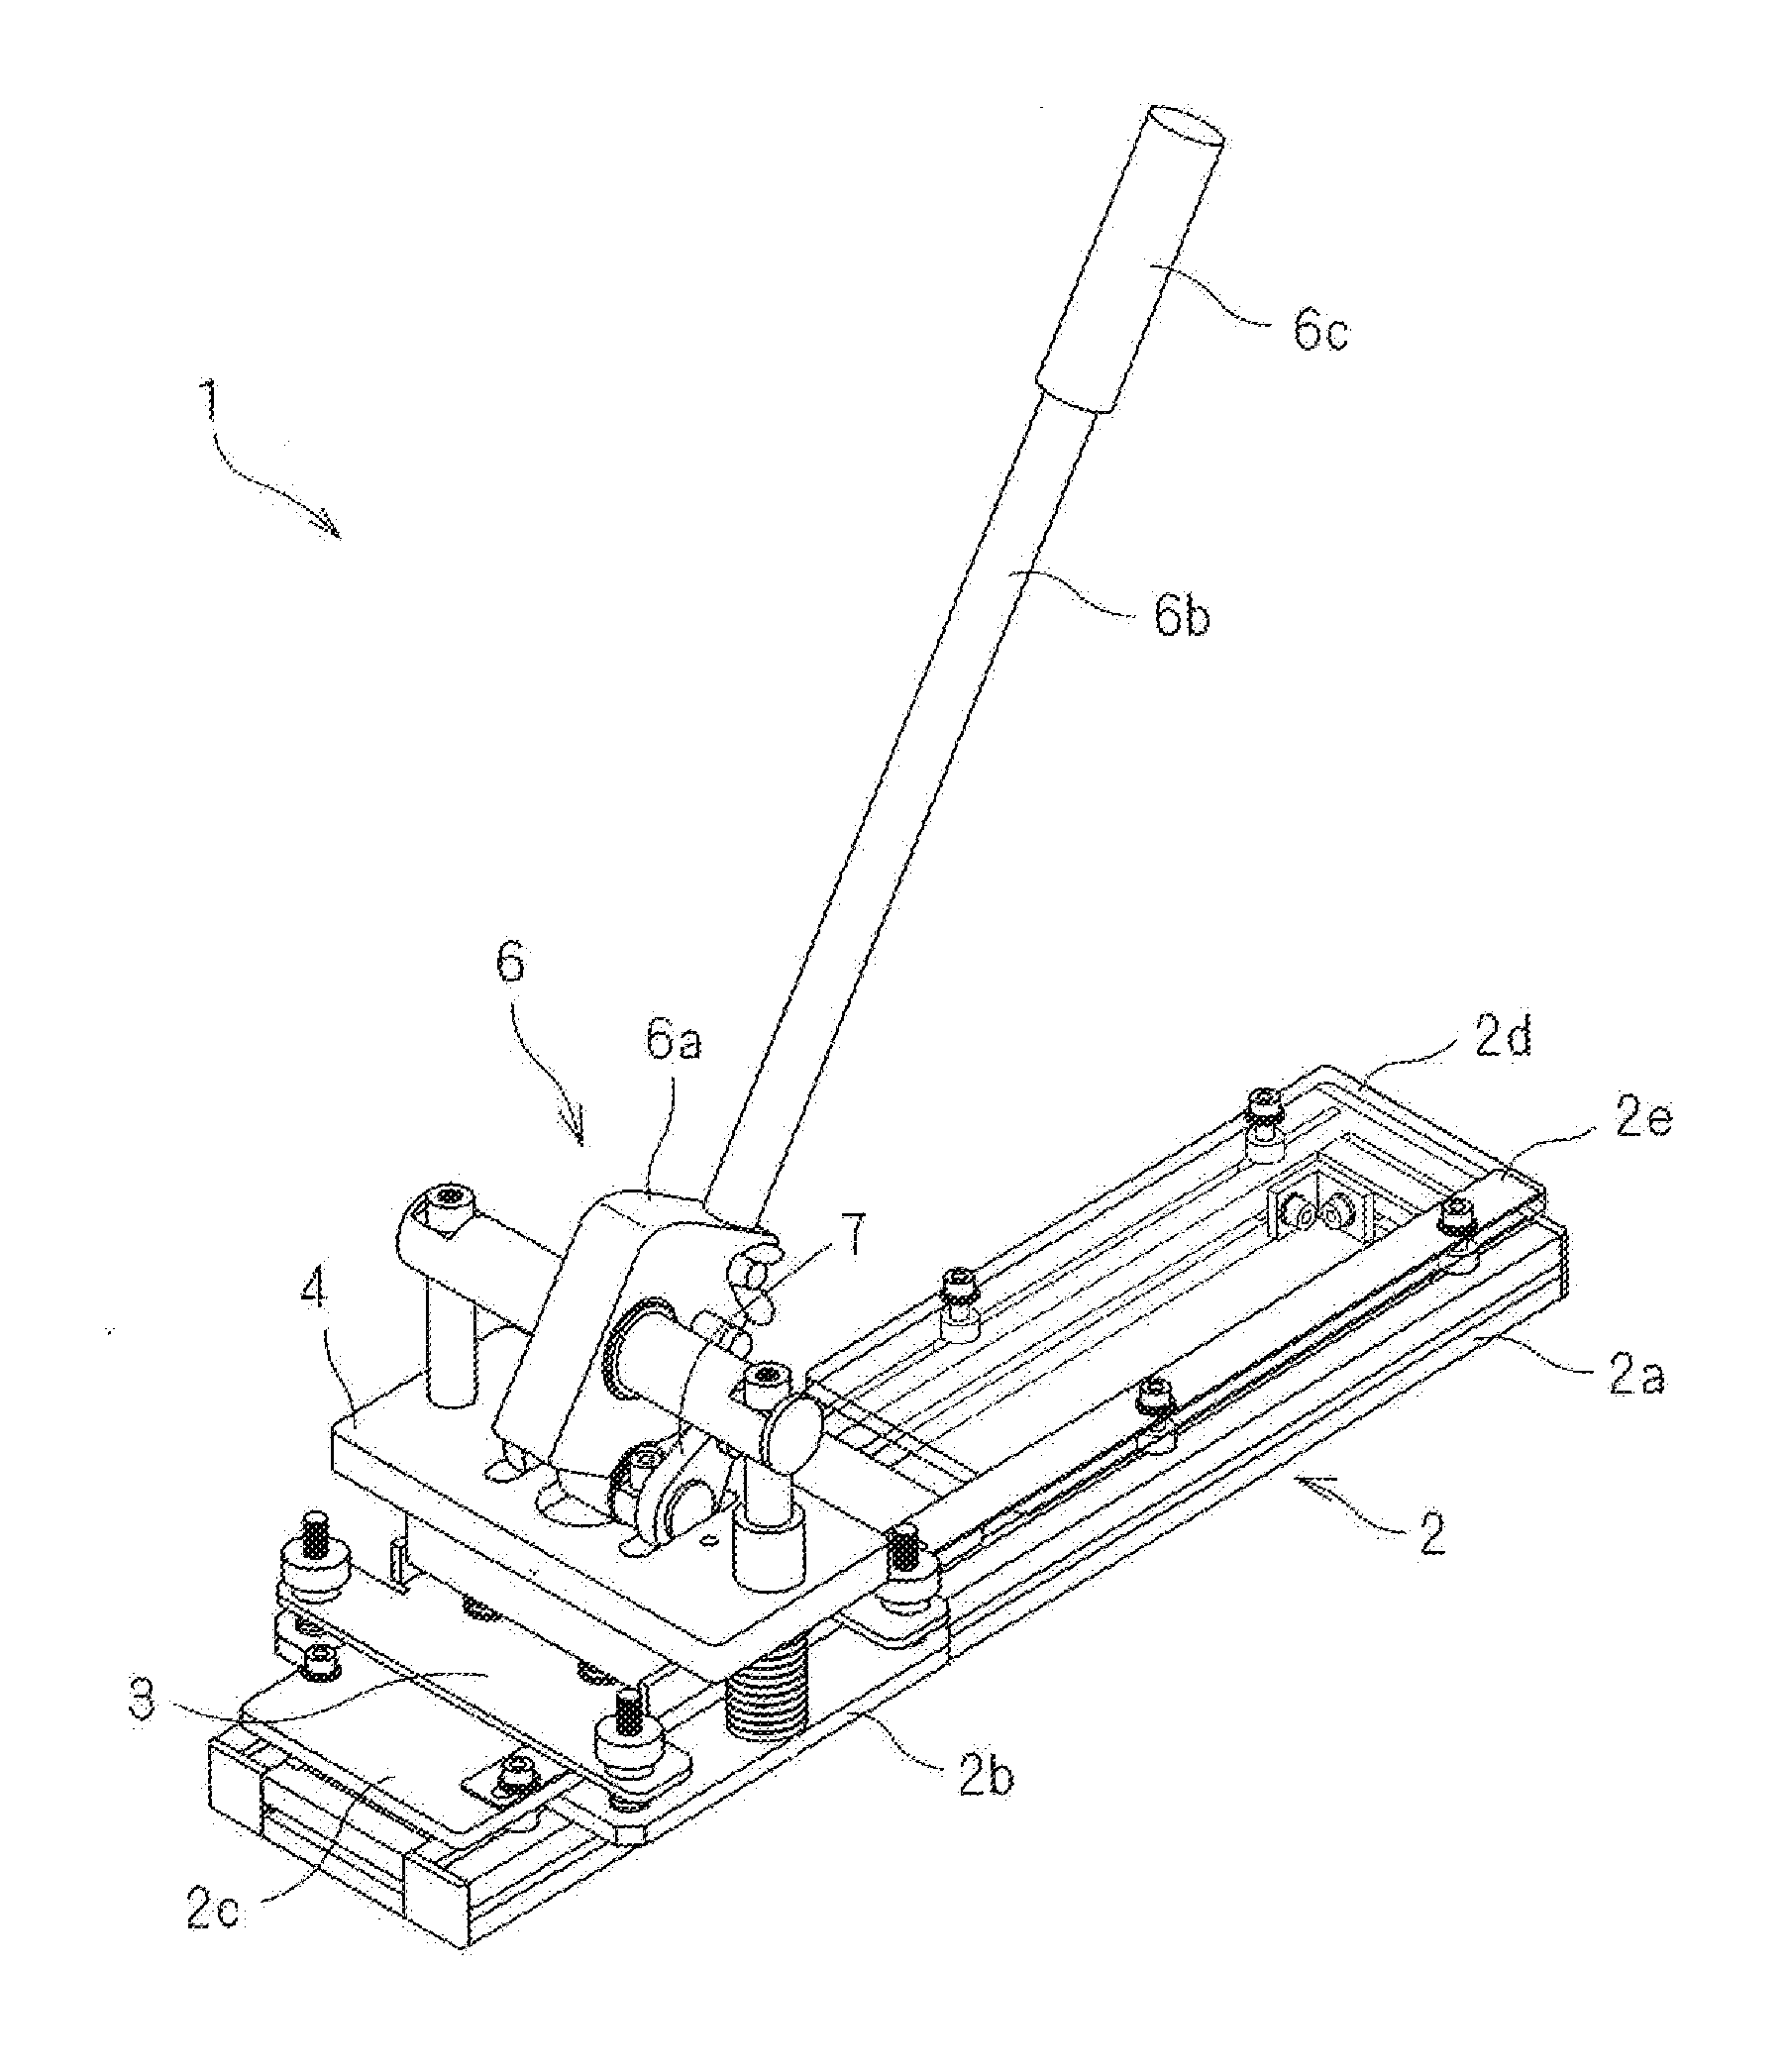 Sheet cutter and belt processing tool